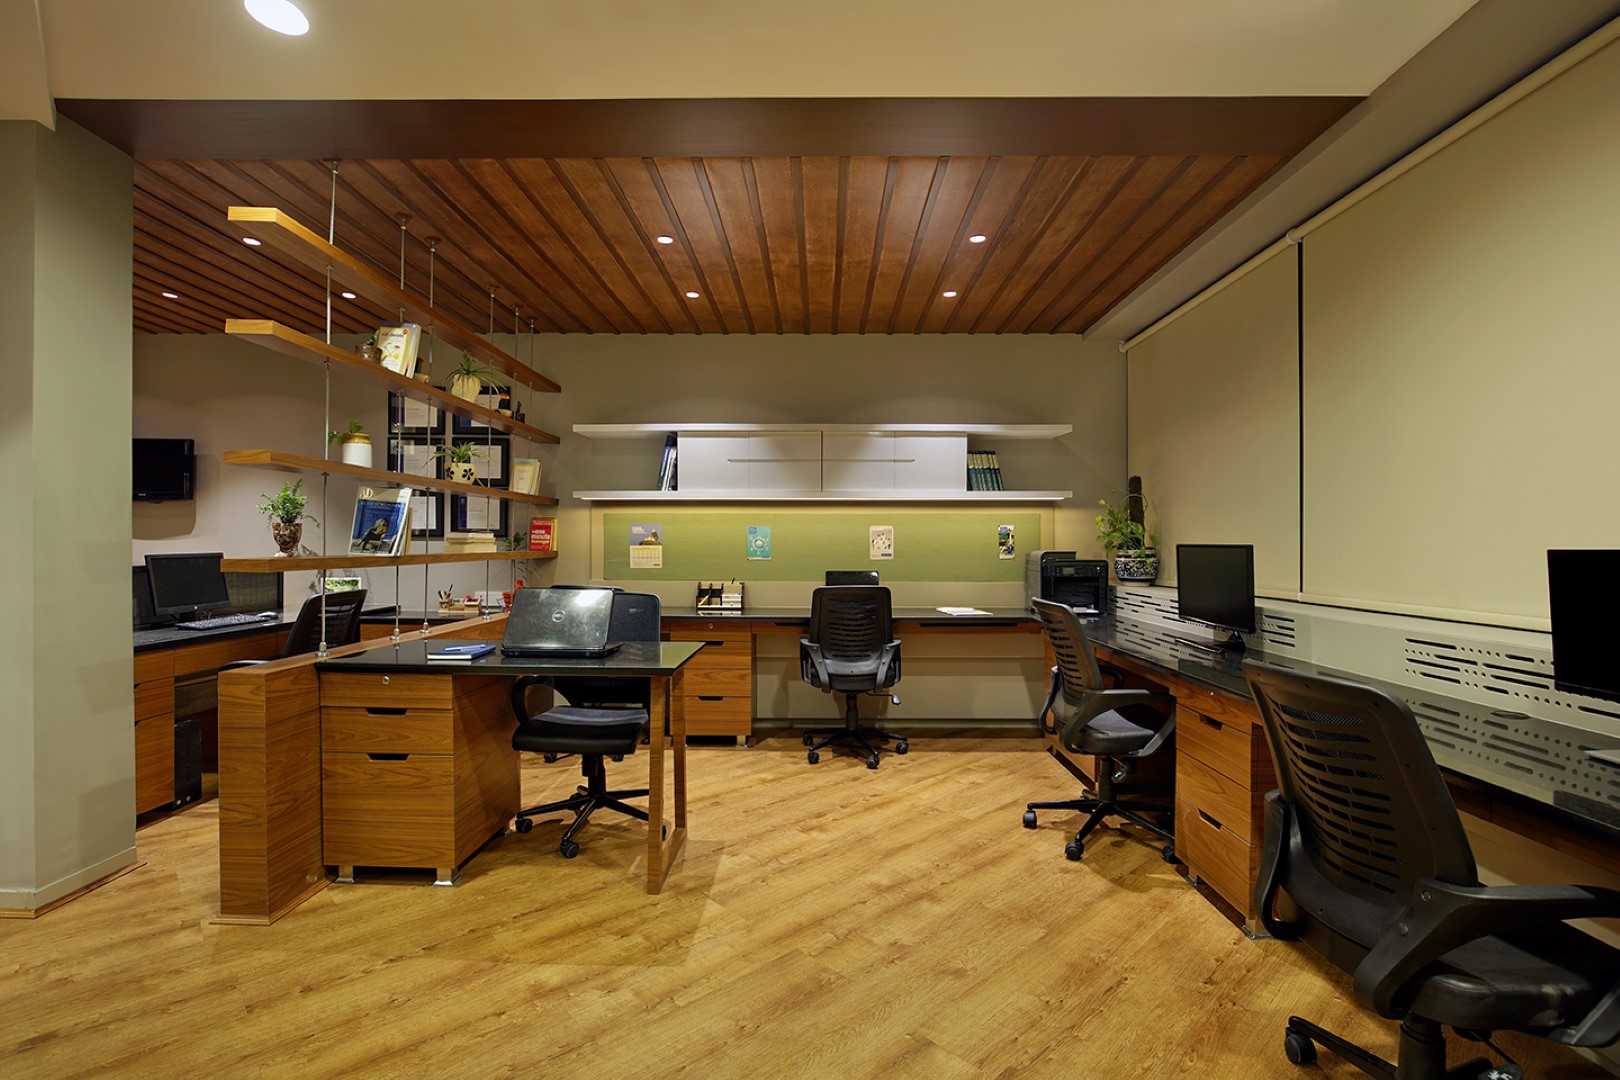 Top 7 Office Interior Design Tips